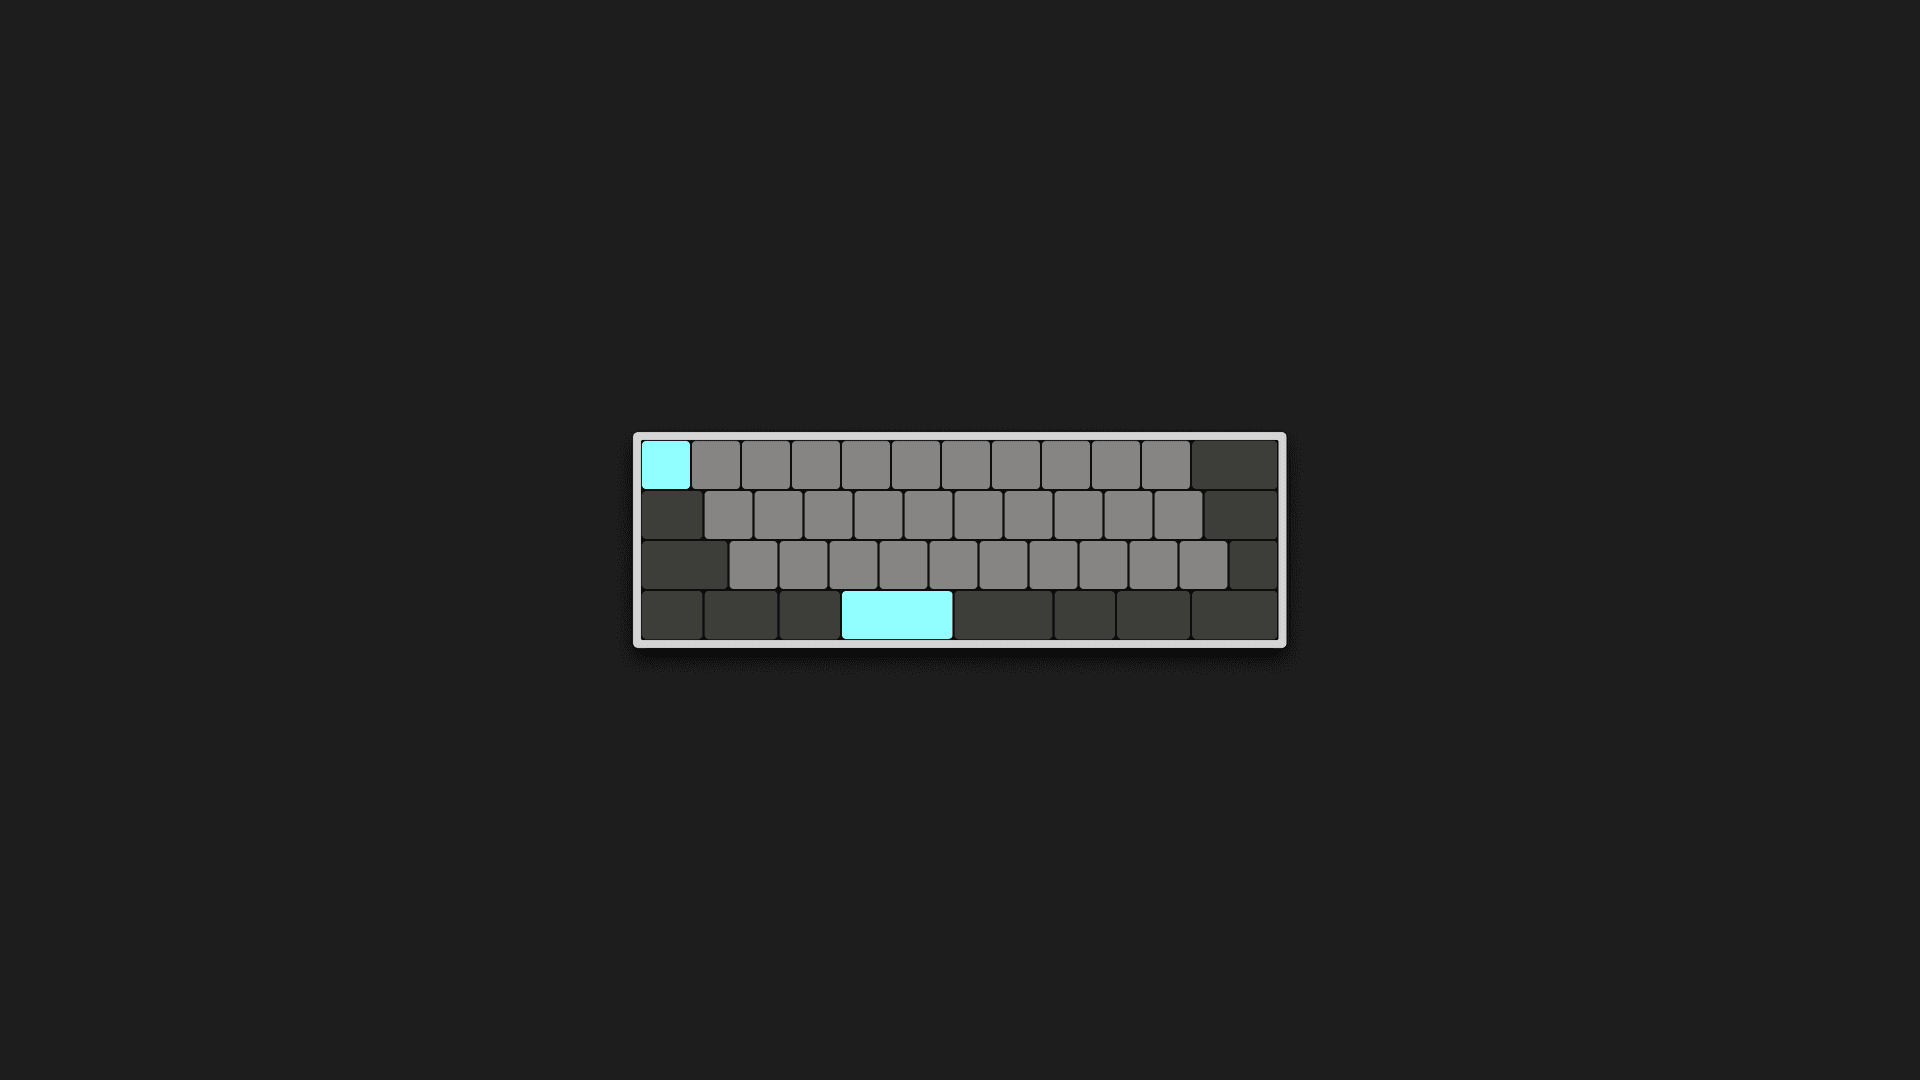 Minimalist Keyboard Design